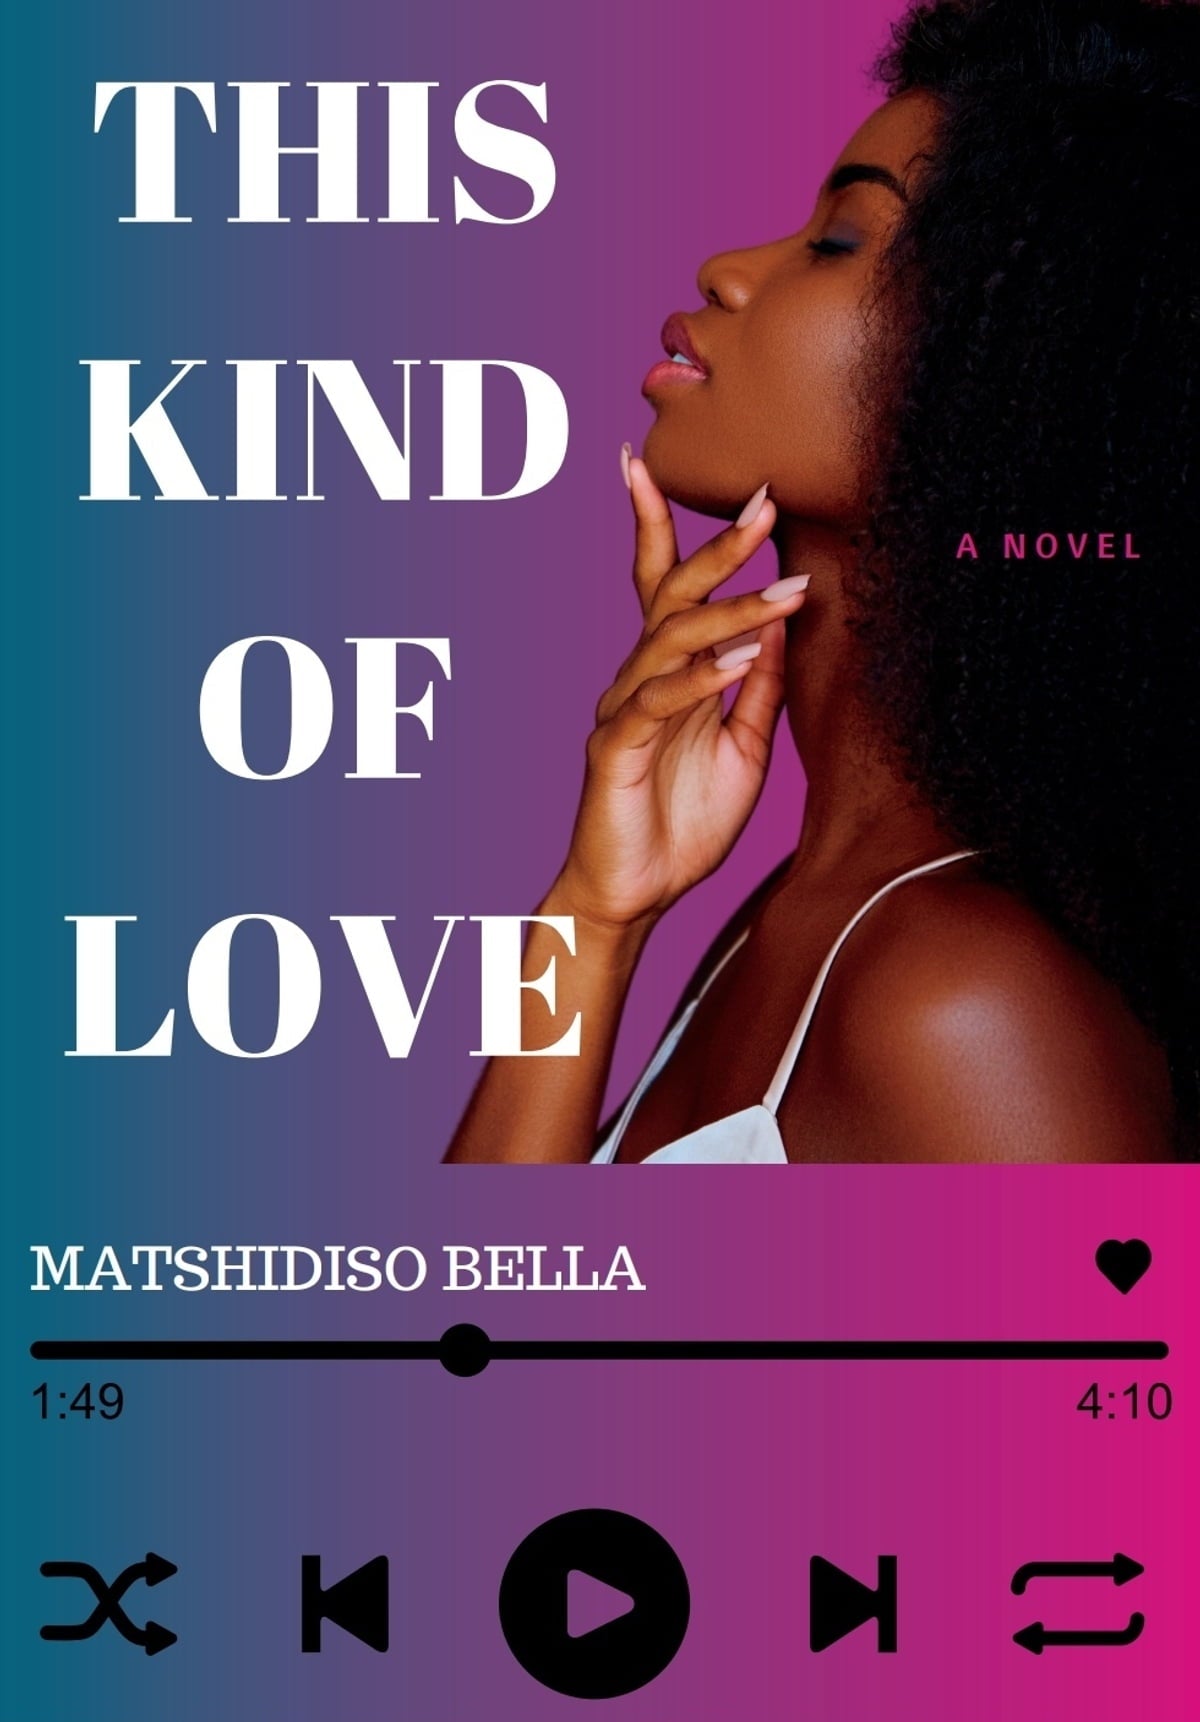 This Kind of Love, by Matshidiso Bella